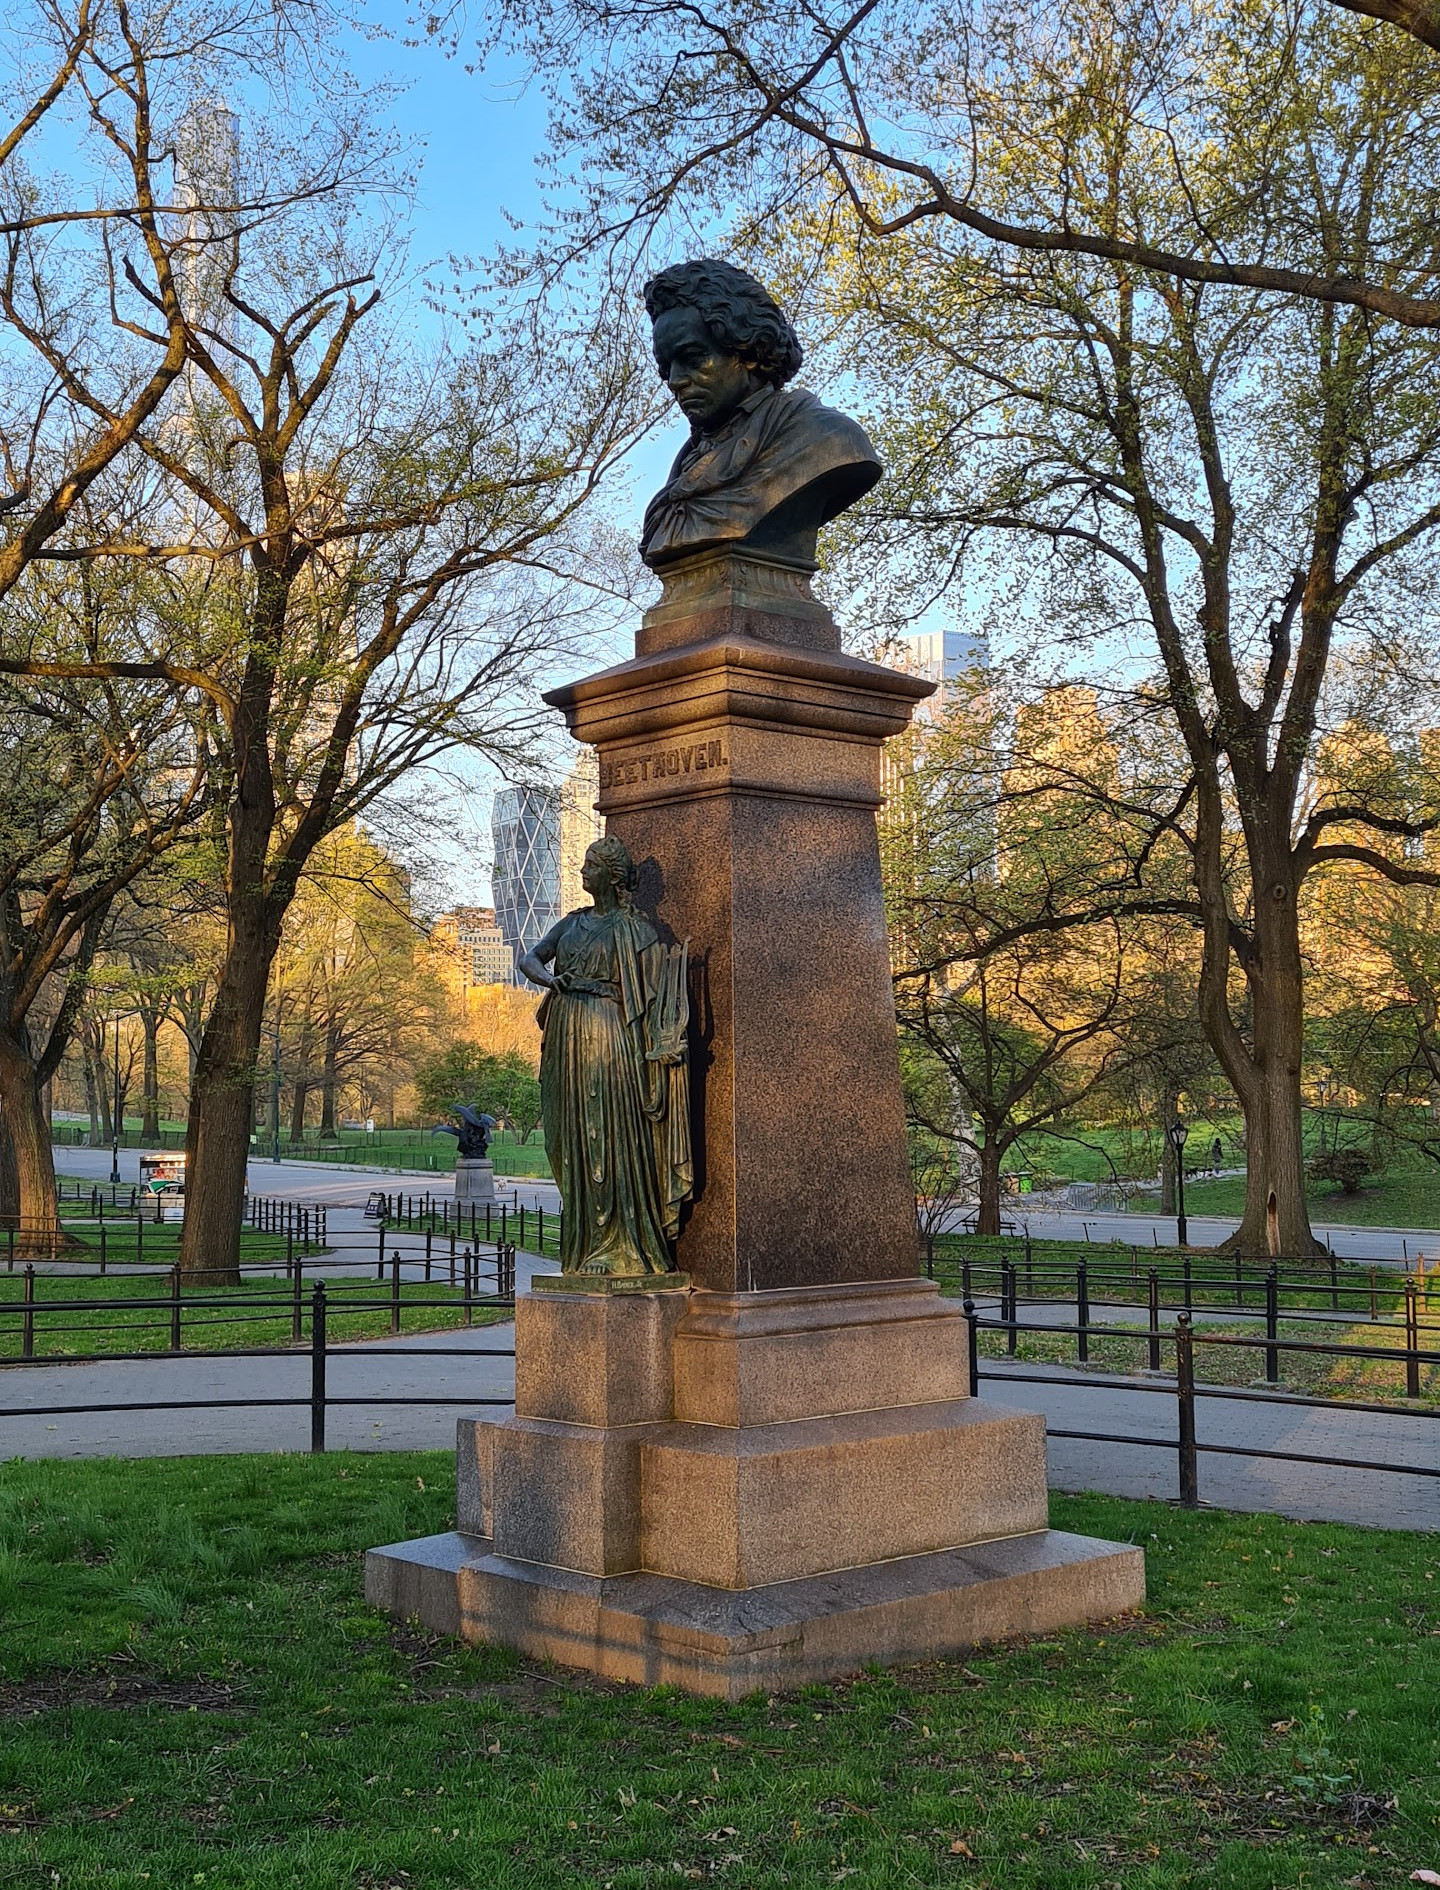 Monumento a Beethoven